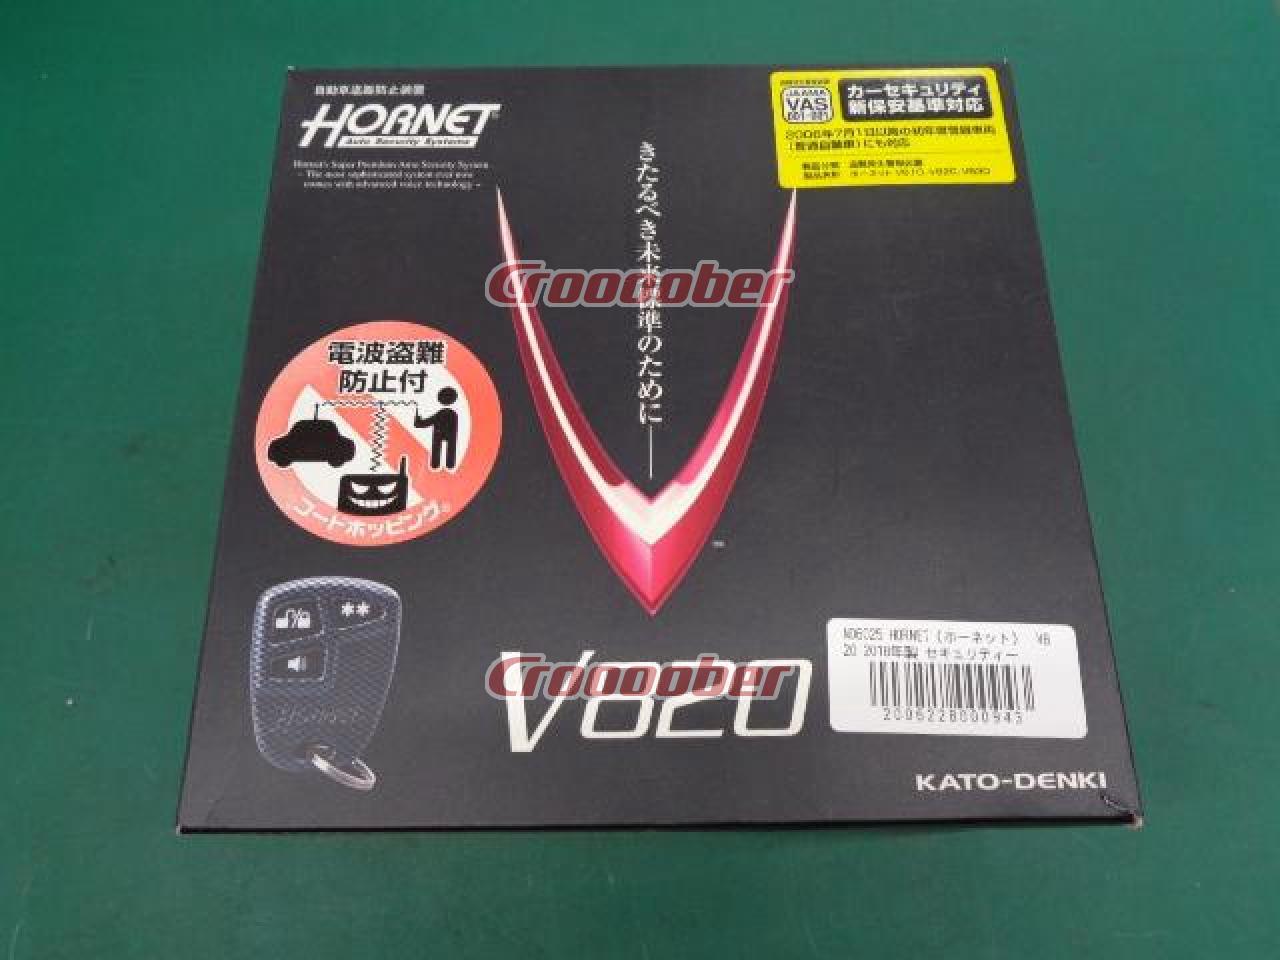 HORNET(ホーネット) V820 | 電装系 セキュリティパーツの通販なら | Croooober(クルーバー)